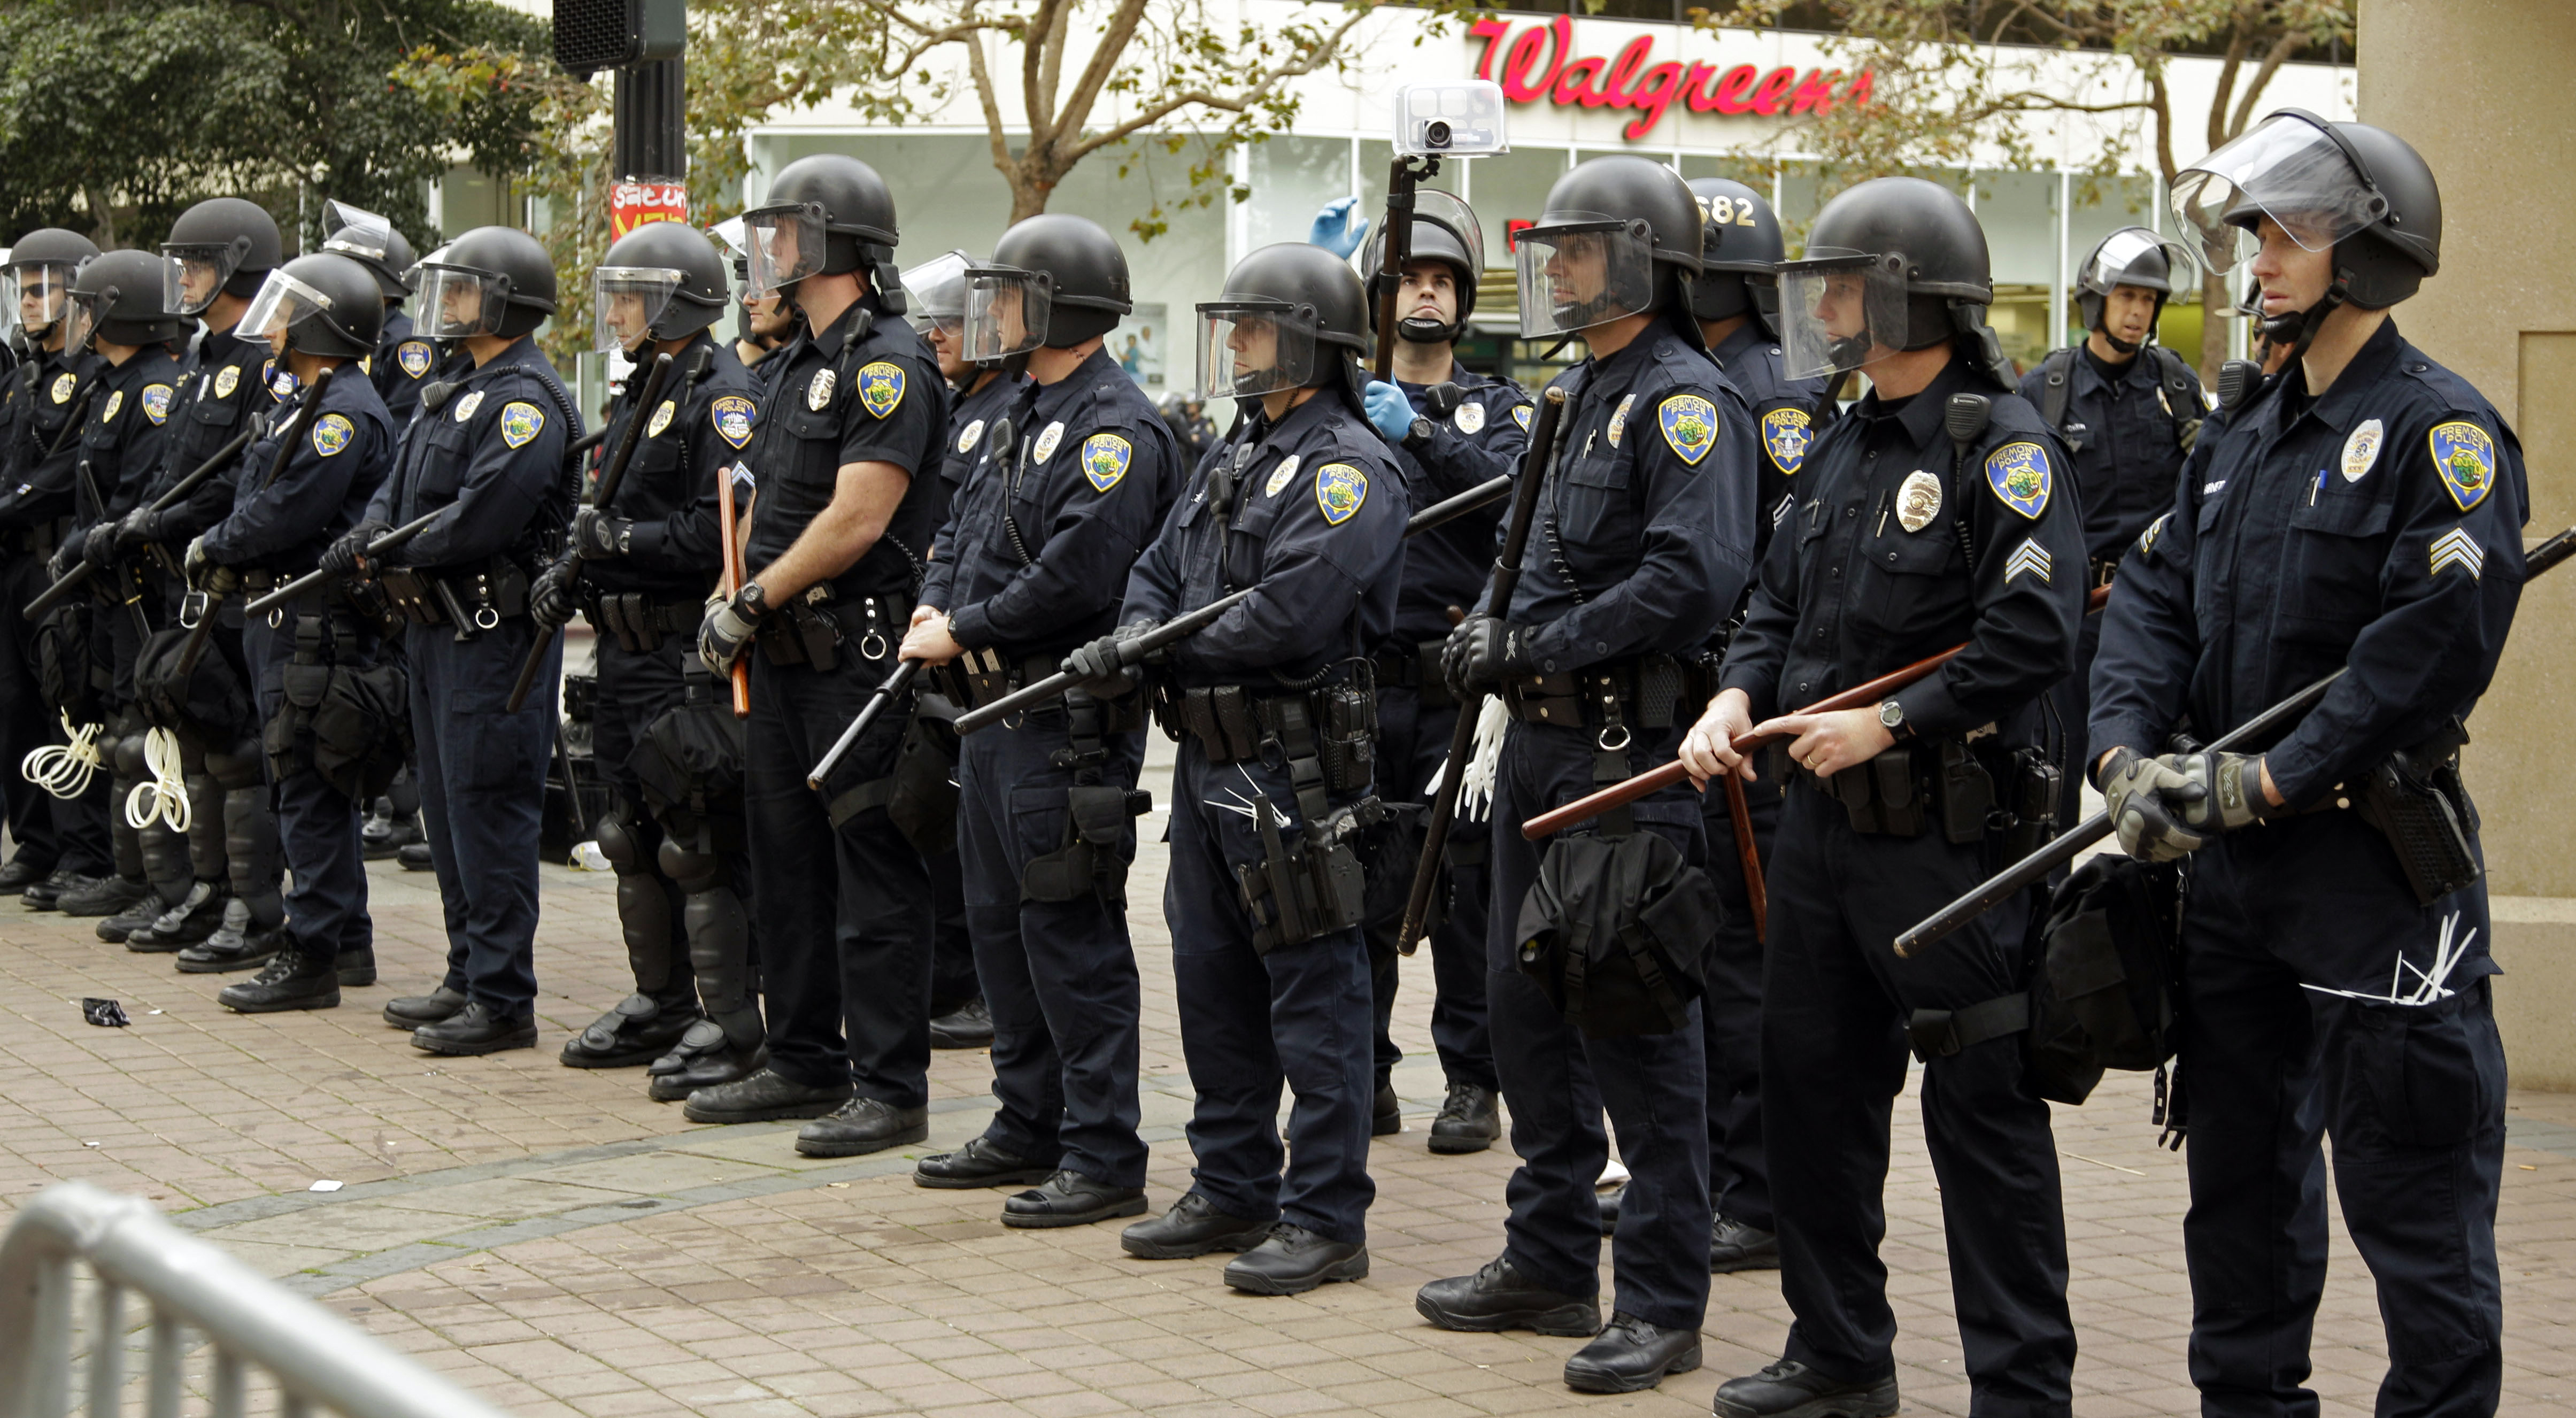 Demonstration, Polisen, Tårgas, Occupy Oakland, Occupy Wall Street, Granater